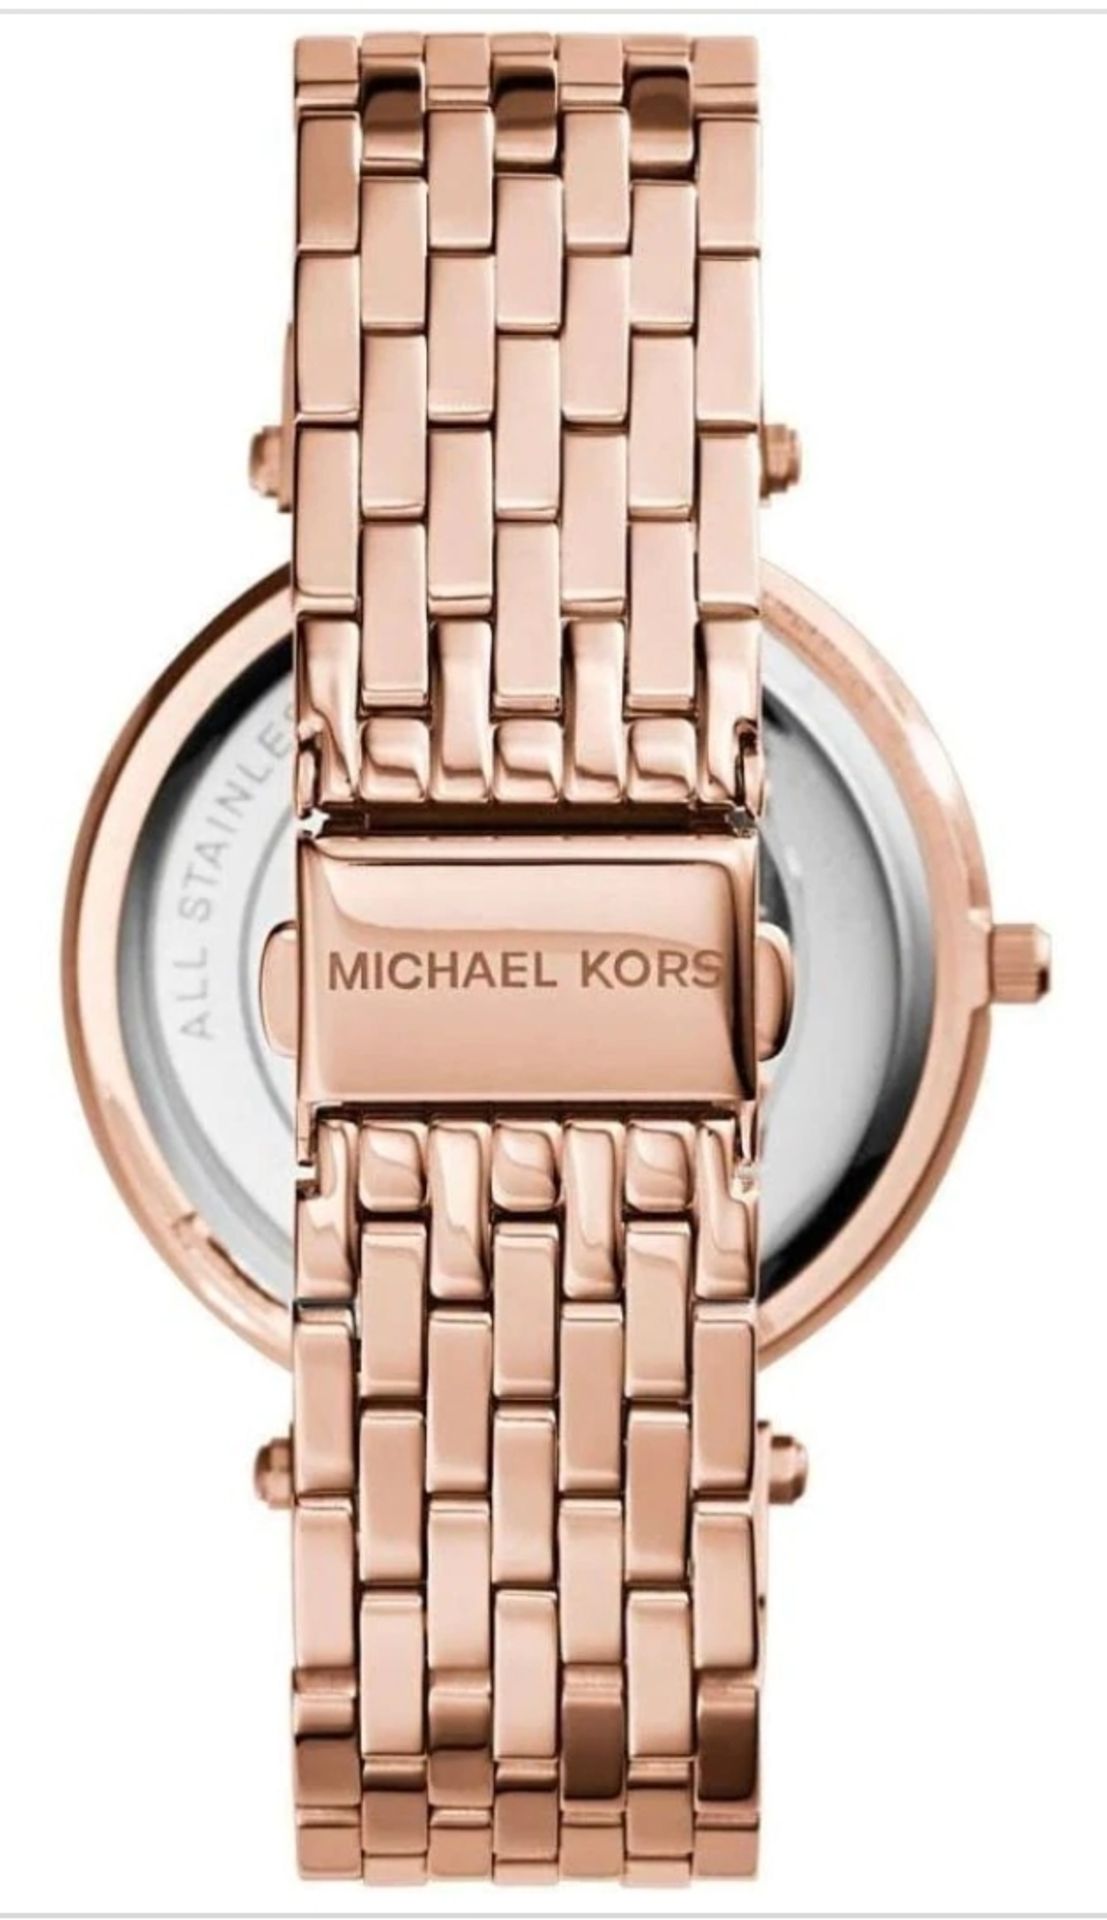 Michael Kors MK3402 Darci Black & Rose Gold Tone Stainless Steel Ladies Watch - Image 6 of 7